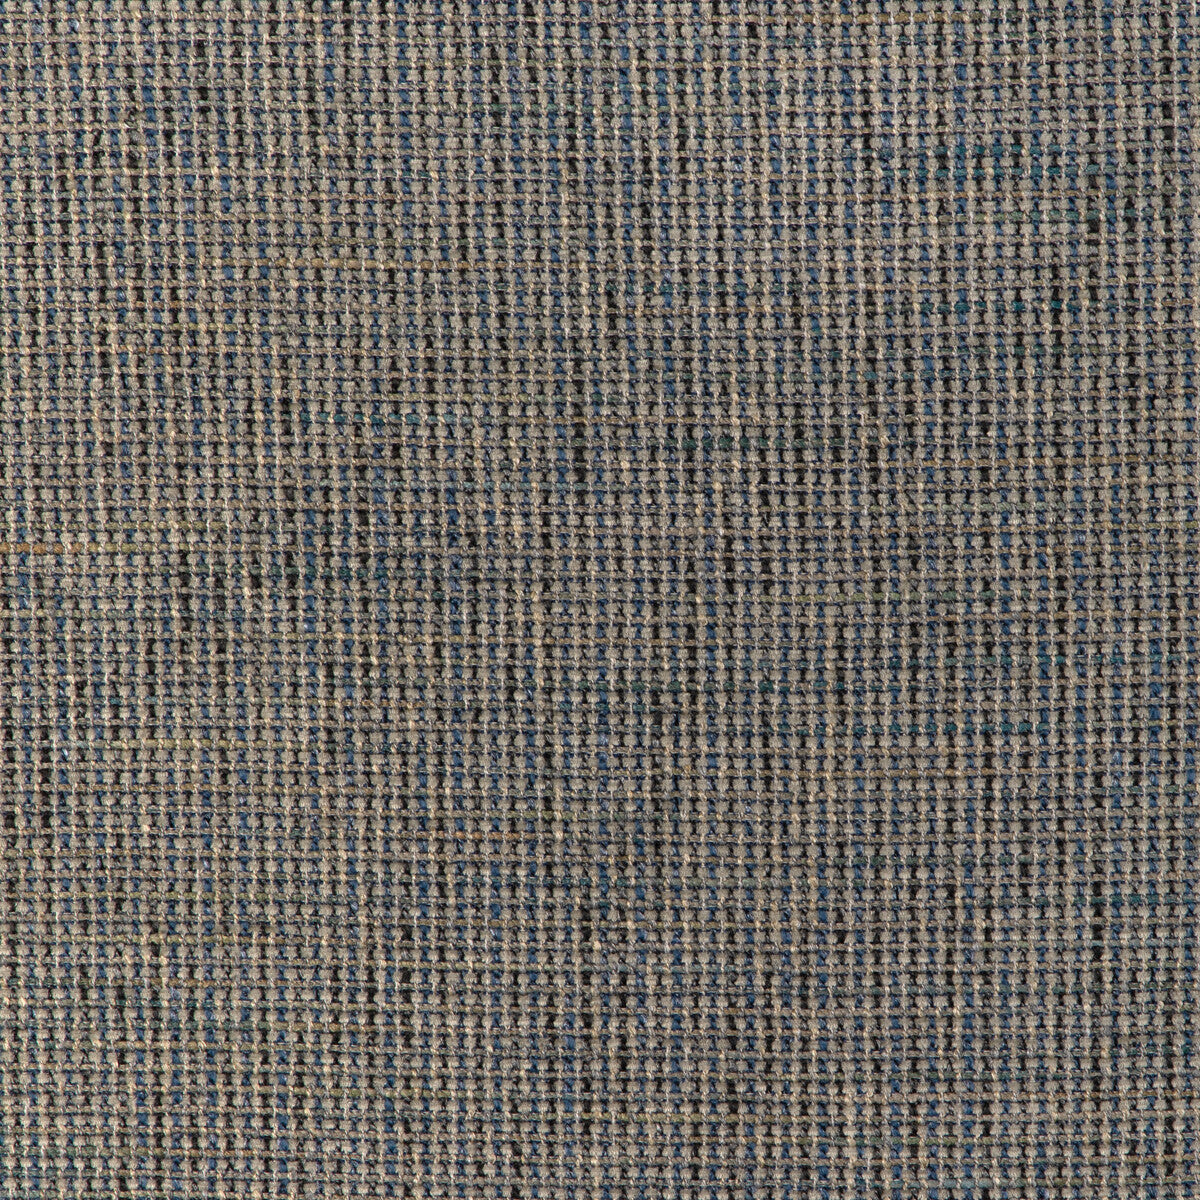 Kravet Smart fabric in 36669-516 color - pattern 36669.516.0 - by Kravet Smart in the Performance Kravetarmor collection